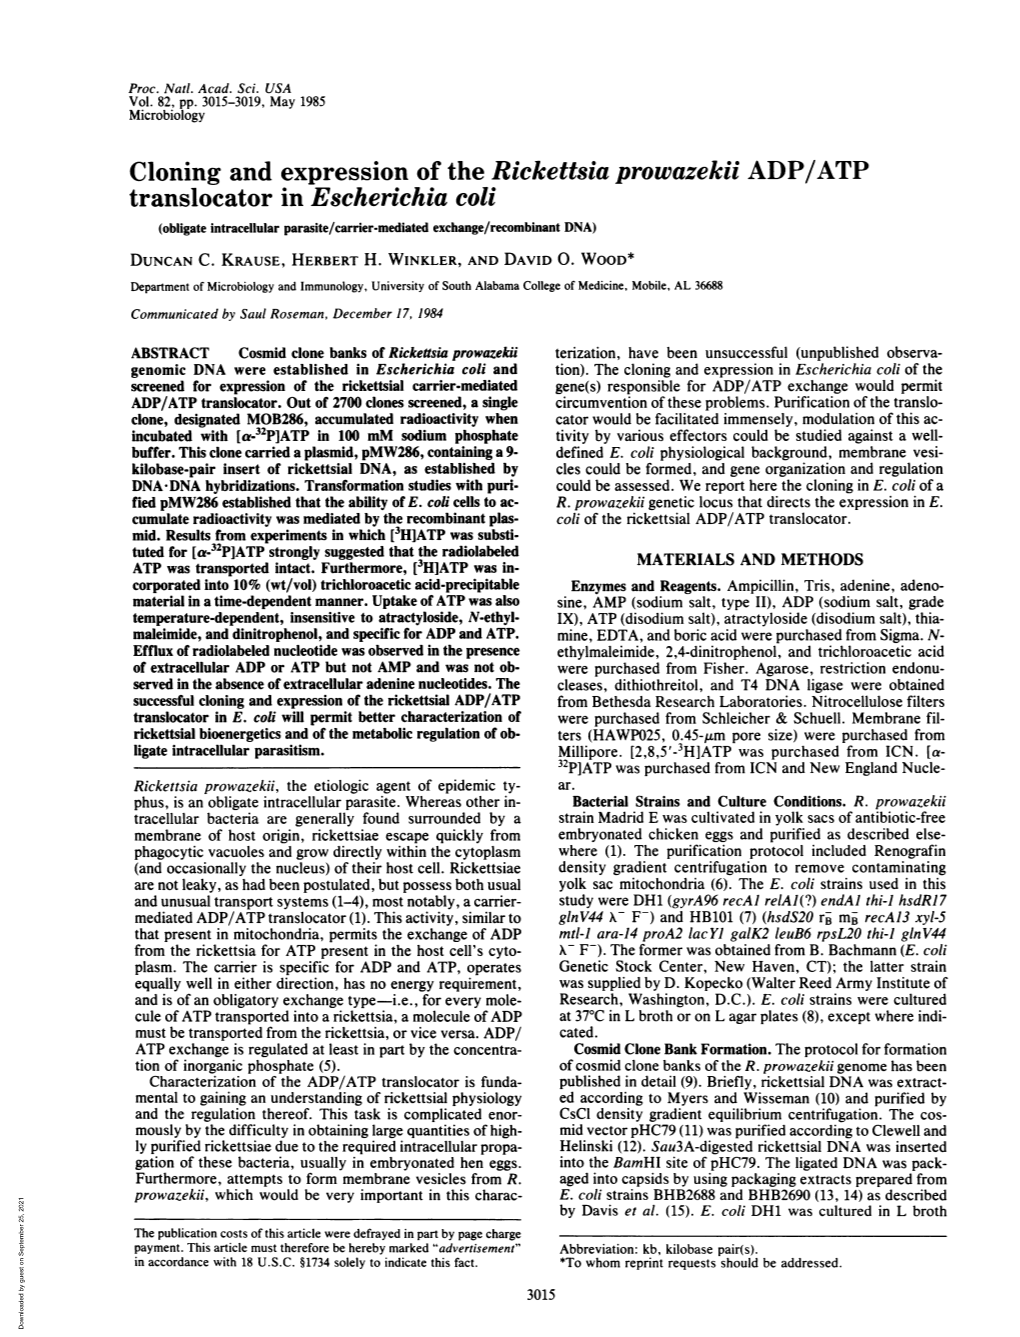 Cloning and Expression of the Rickettsia Prowazekii ADP